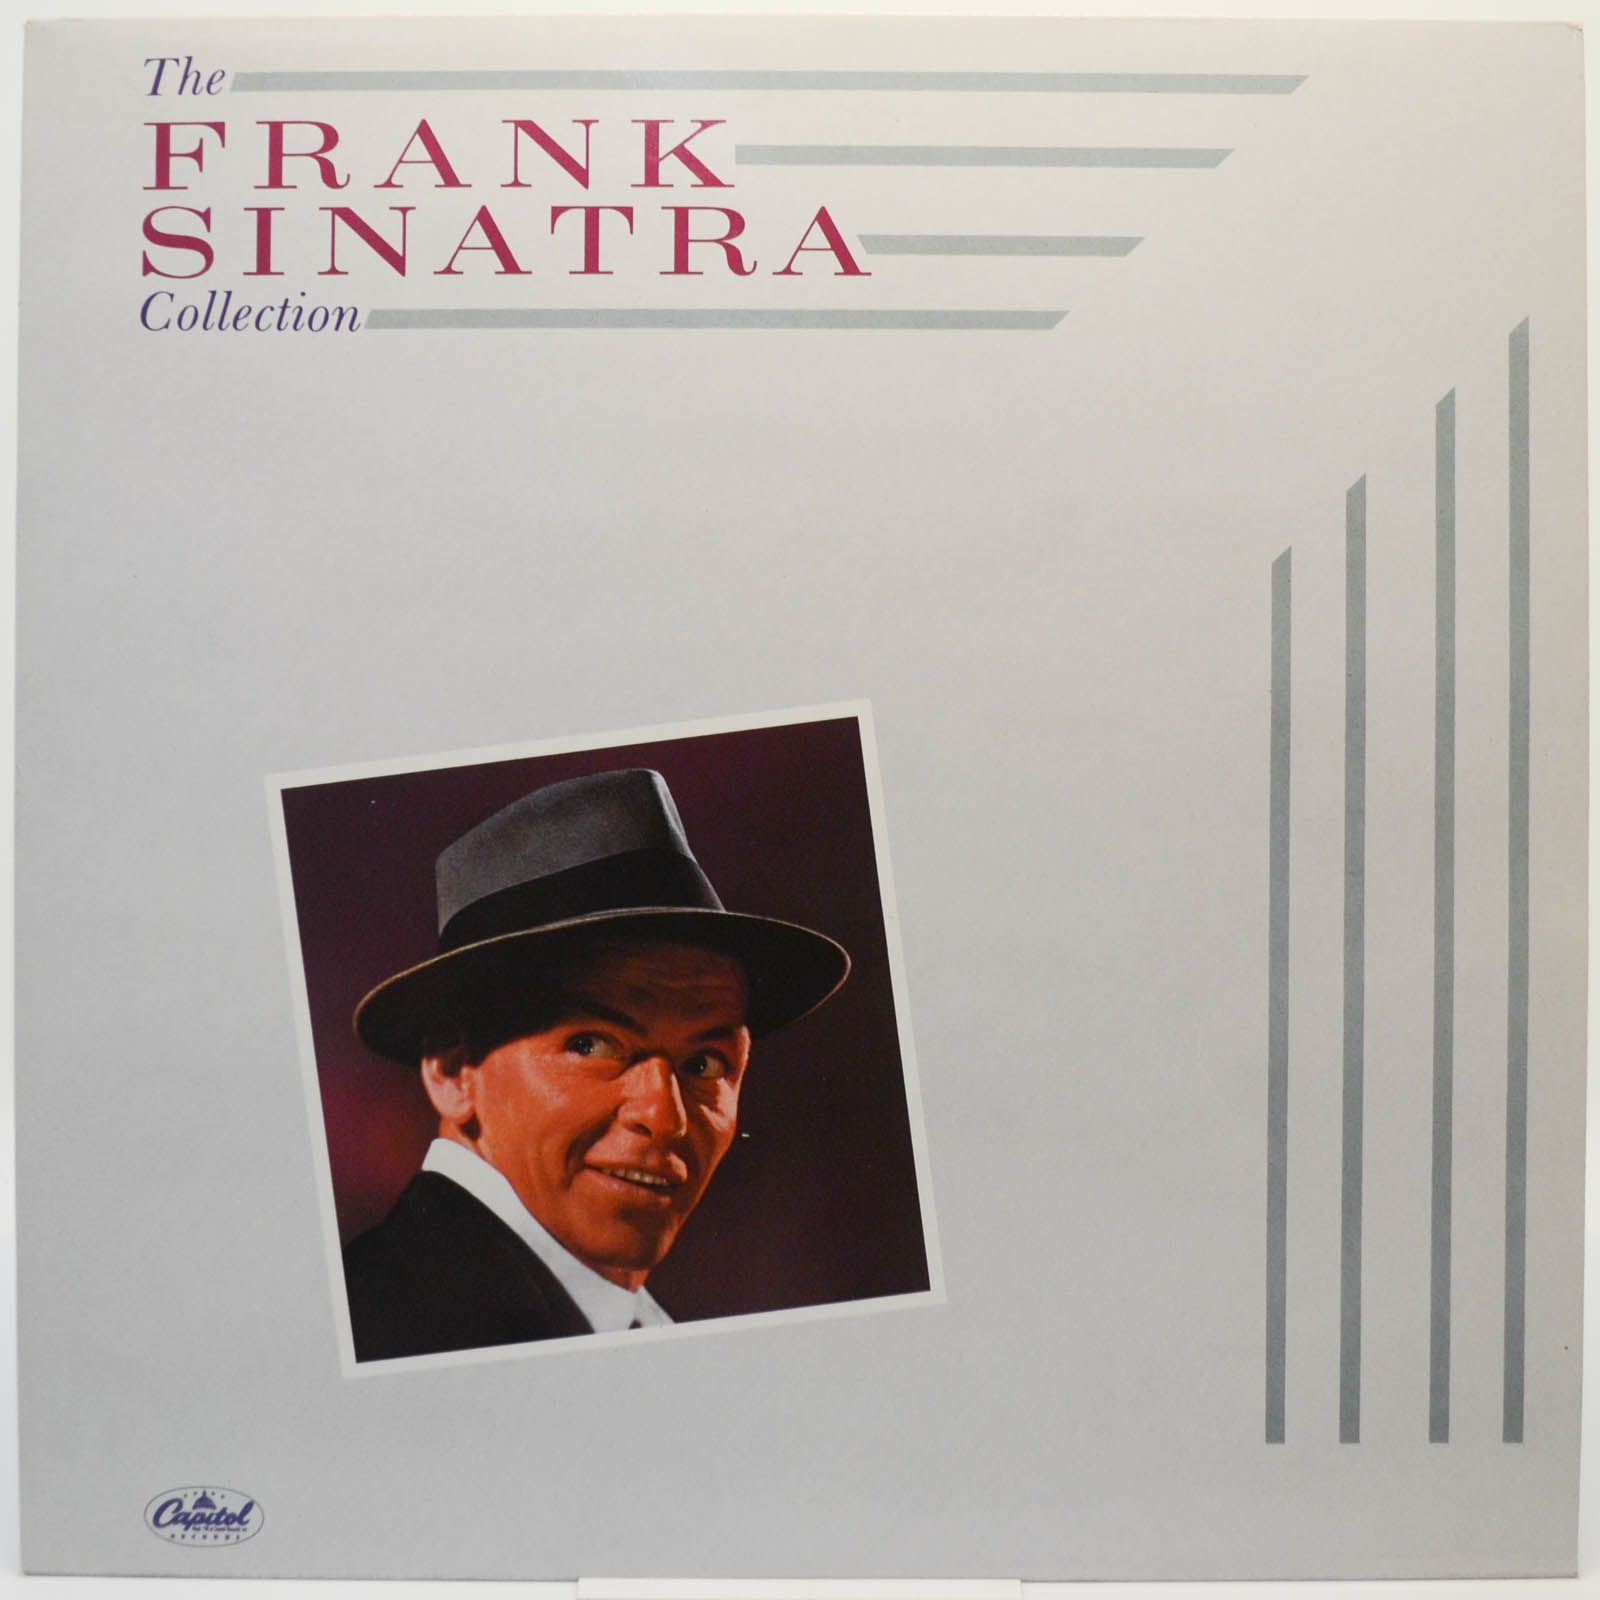 Frank Sinatra — The Frank Sinatra Collection (UK), 1986